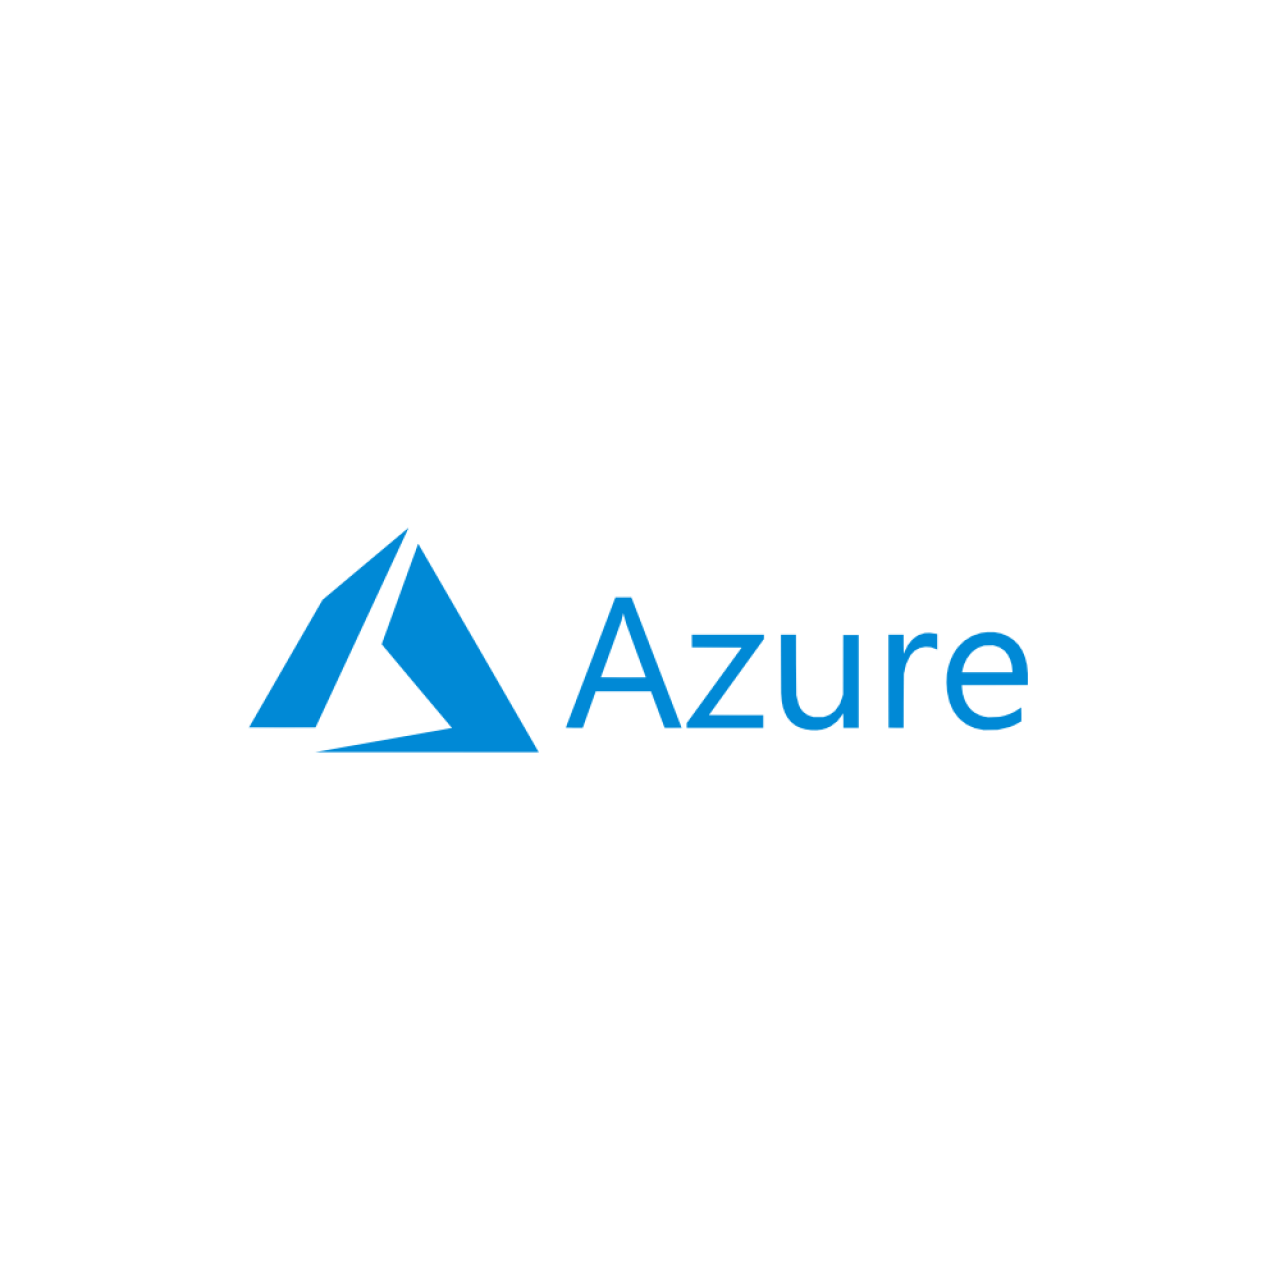 Microsoft Azure.